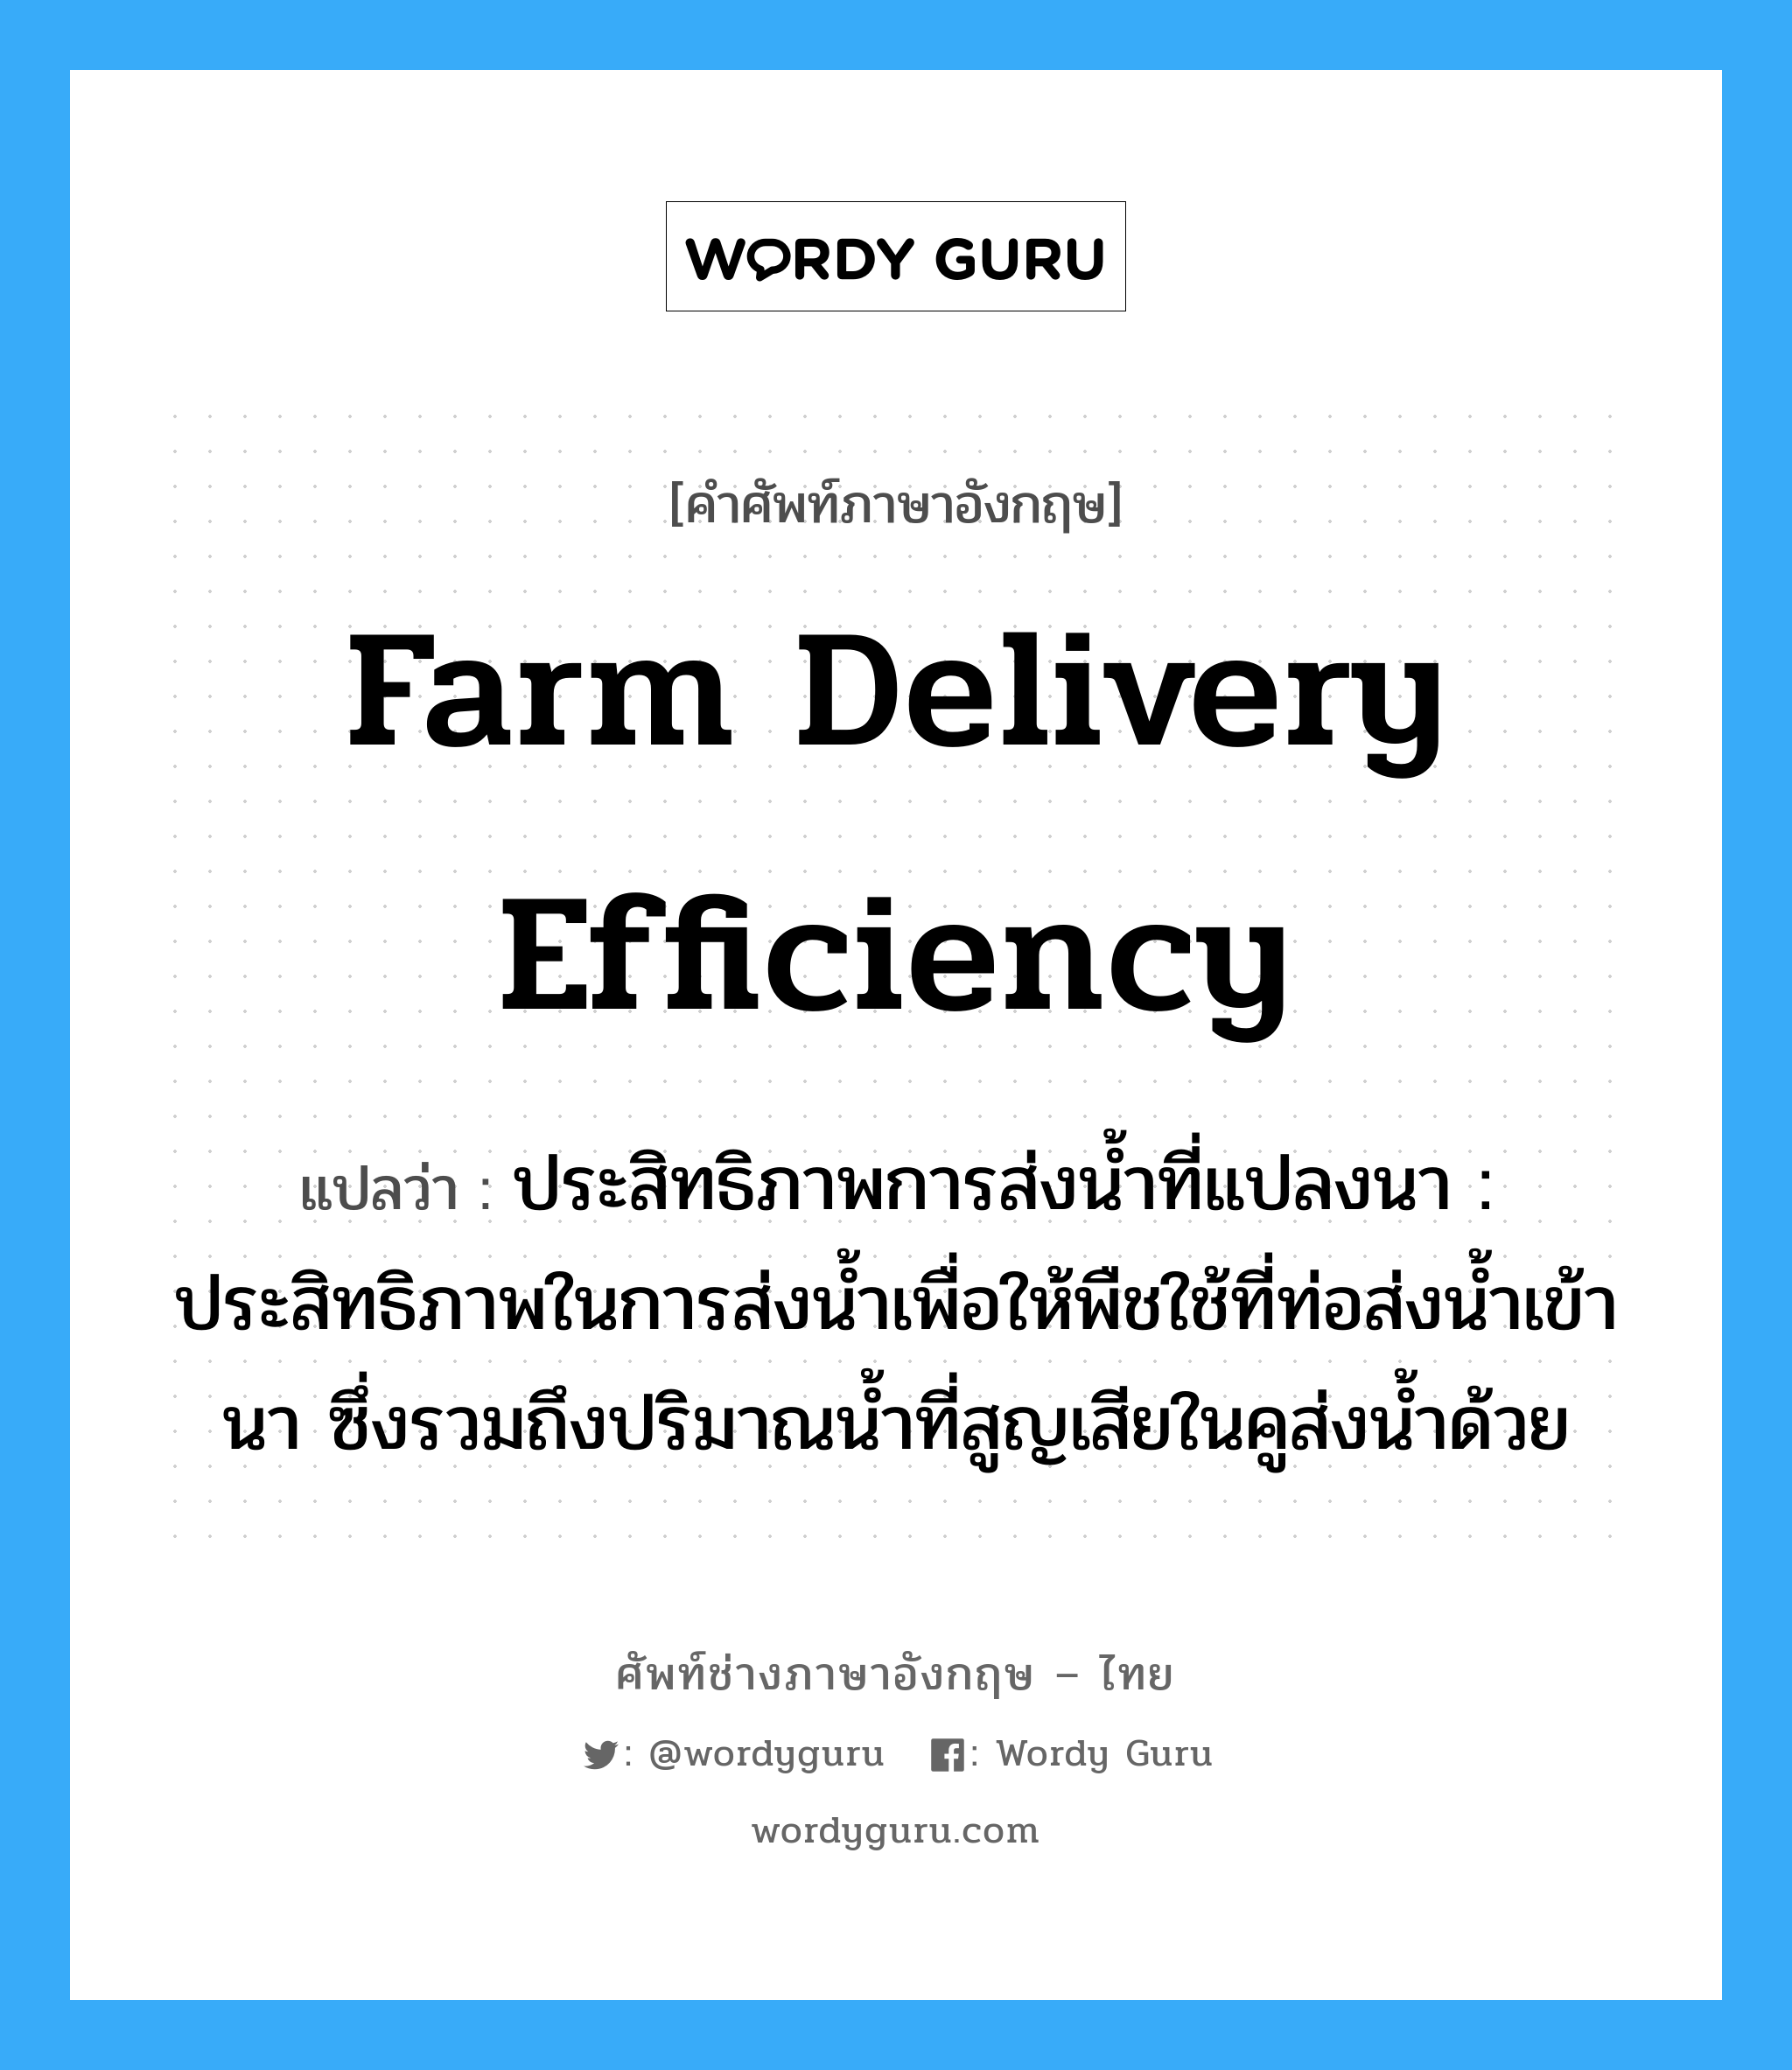 farm delivery efficiency แปลว่า?, คำศัพท์ช่างภาษาอังกฤษ - ไทย farm delivery efficiency คำศัพท์ภาษาอังกฤษ farm delivery efficiency แปลว่า ประสิทธิภาพการส่งน้ำที่แปลงนา : ประสิทธิภาพในการส่งน้ำเพื่อให้พืชใช้ที่ท่อส่งน้ำเข้านา ซึ่งรวมถึงปริมาณน้ำที่สูญเสียในคูส่งน้ำด้วย